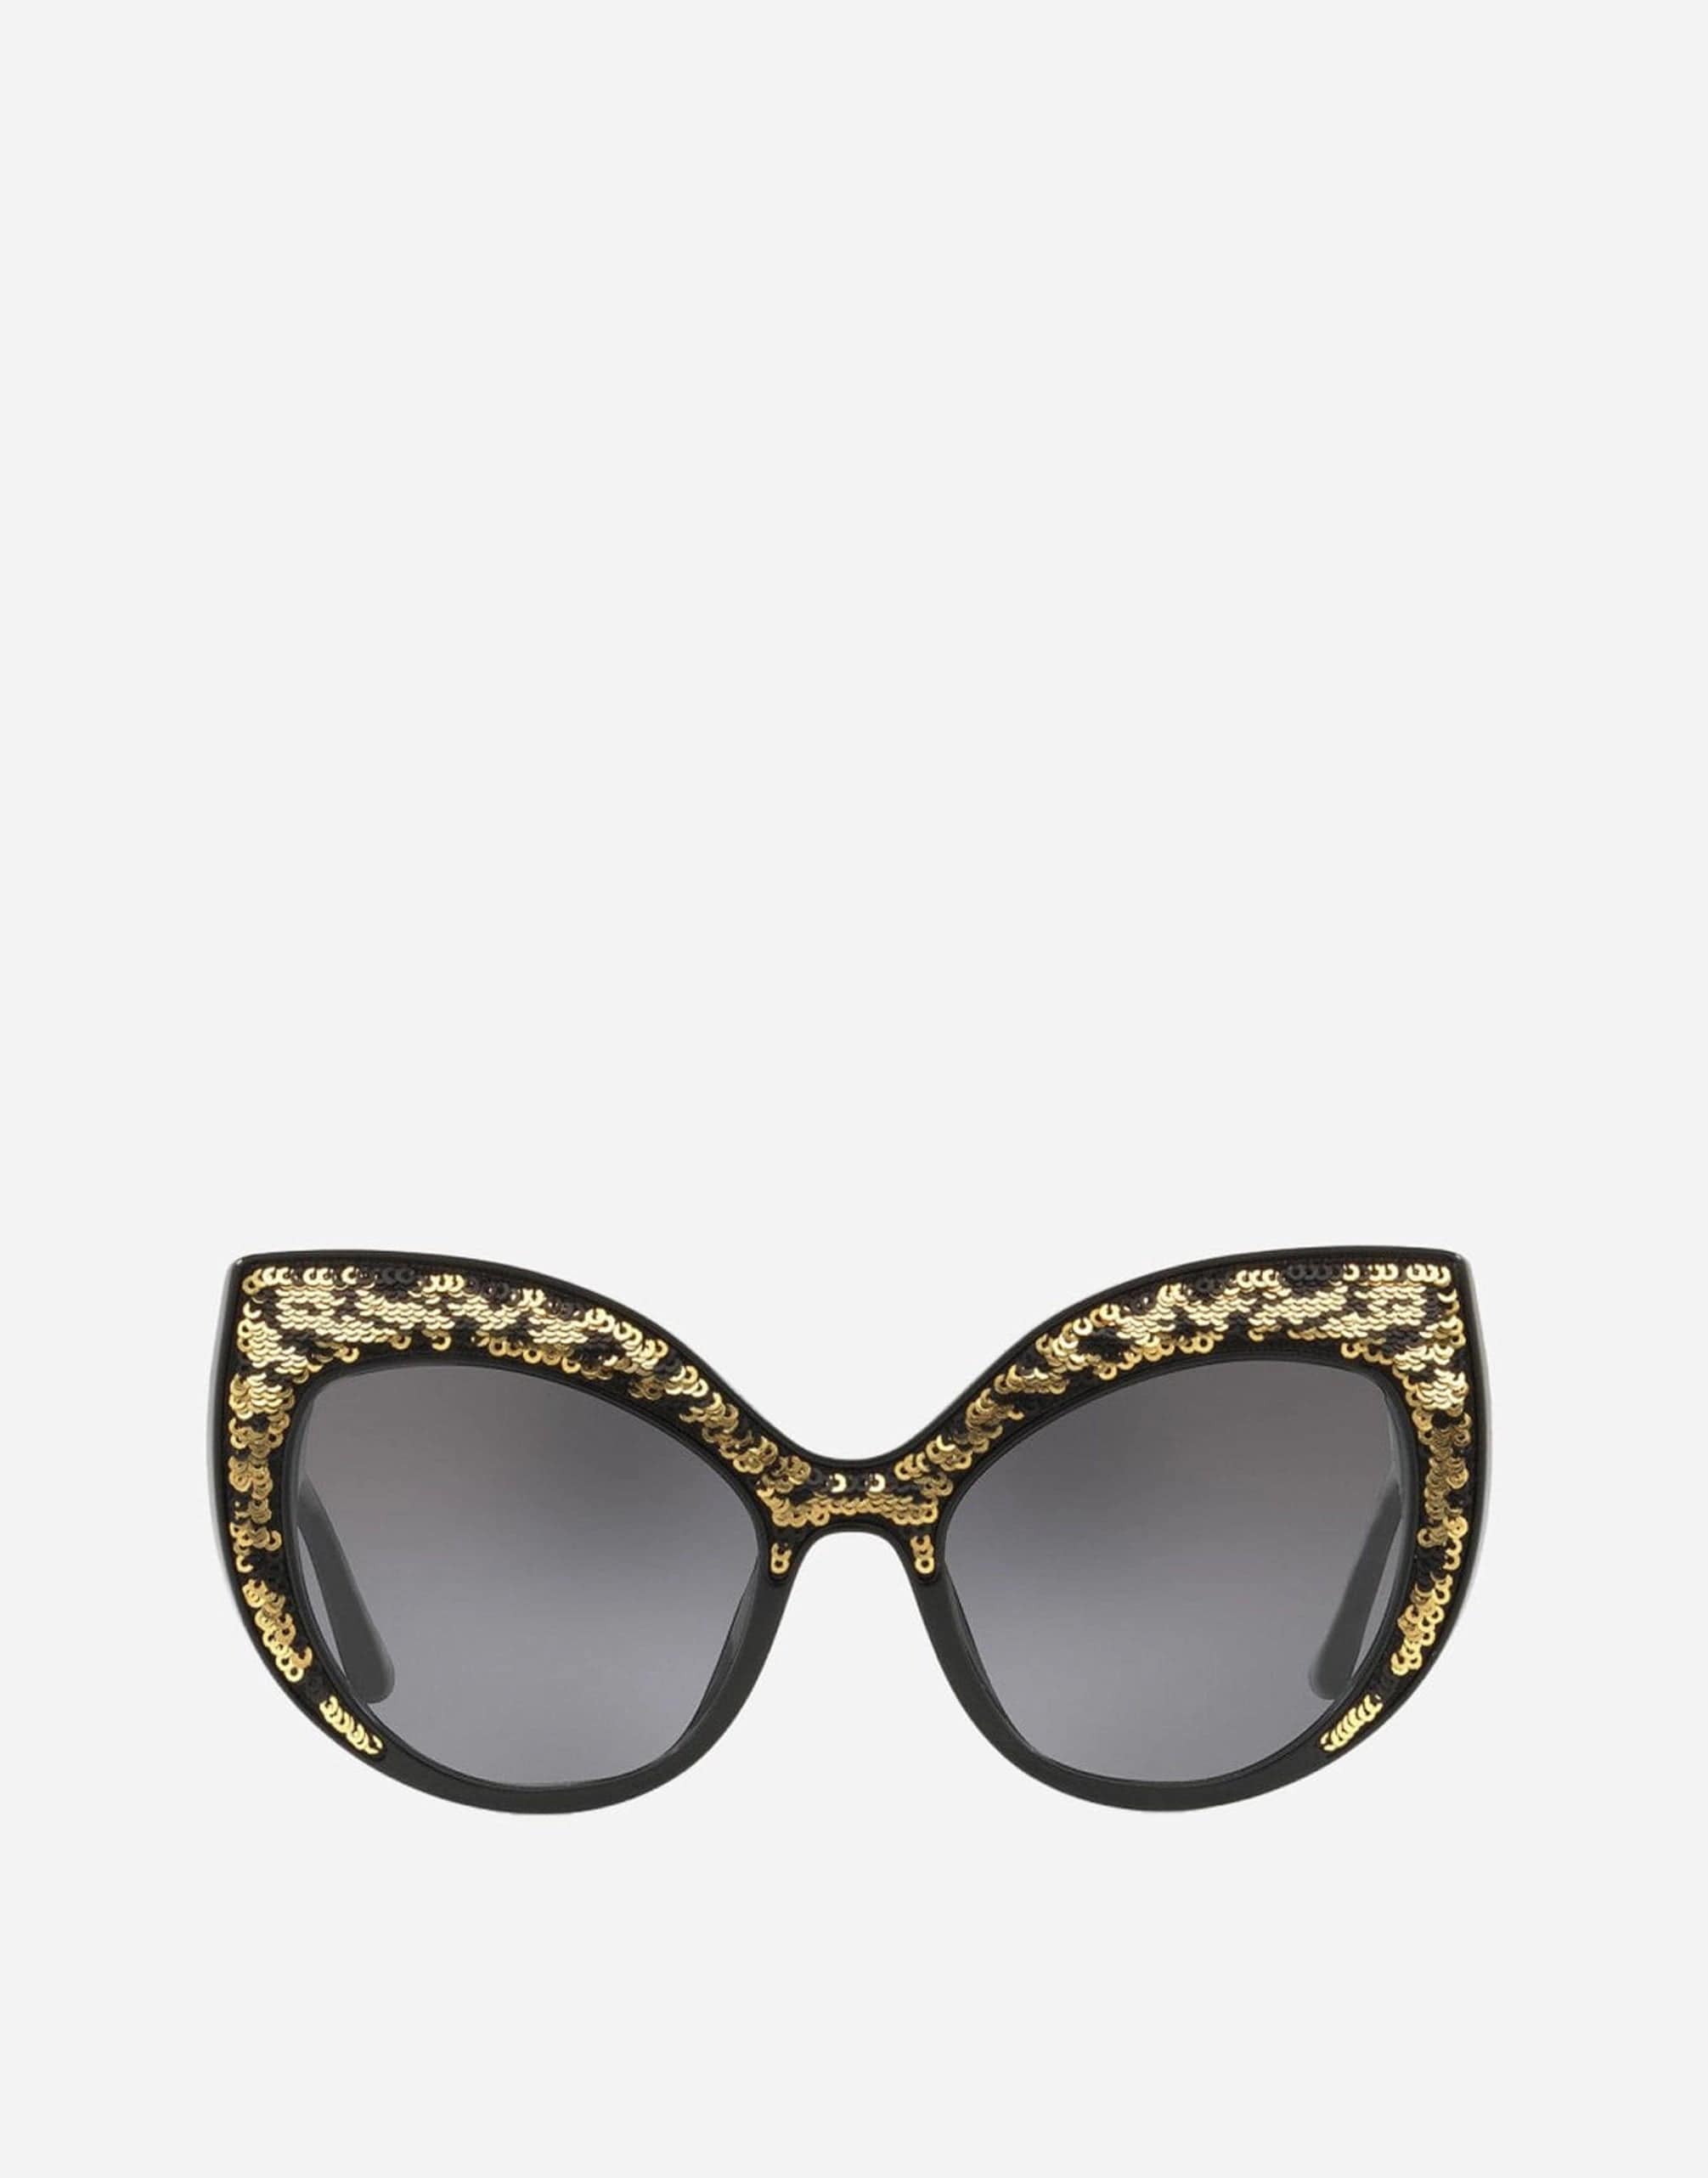 Dolce & Gabbana DG4326 Sequin Butterfly Sunglasses